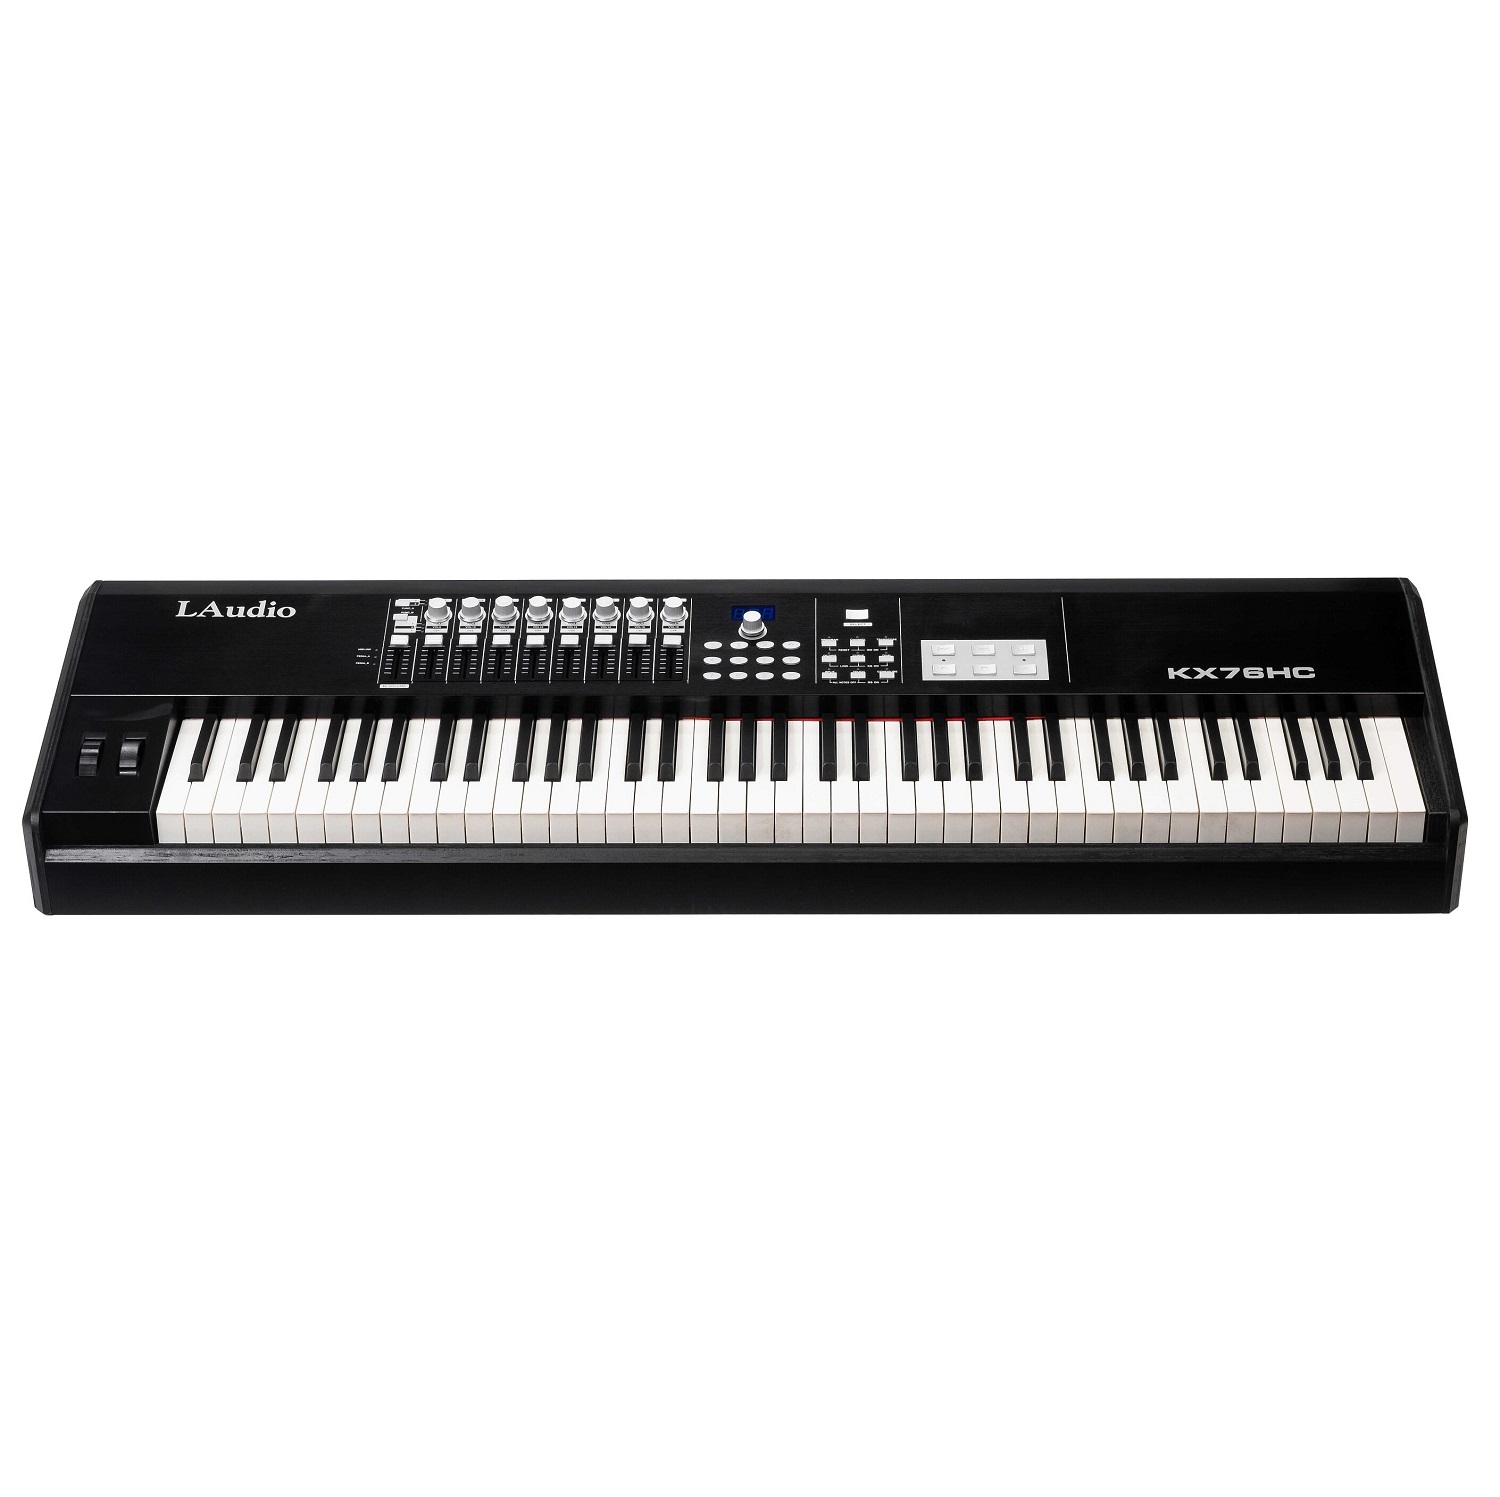 MIDI клавиатуры L Audio KX76HC midi клавиатуры behringer swing